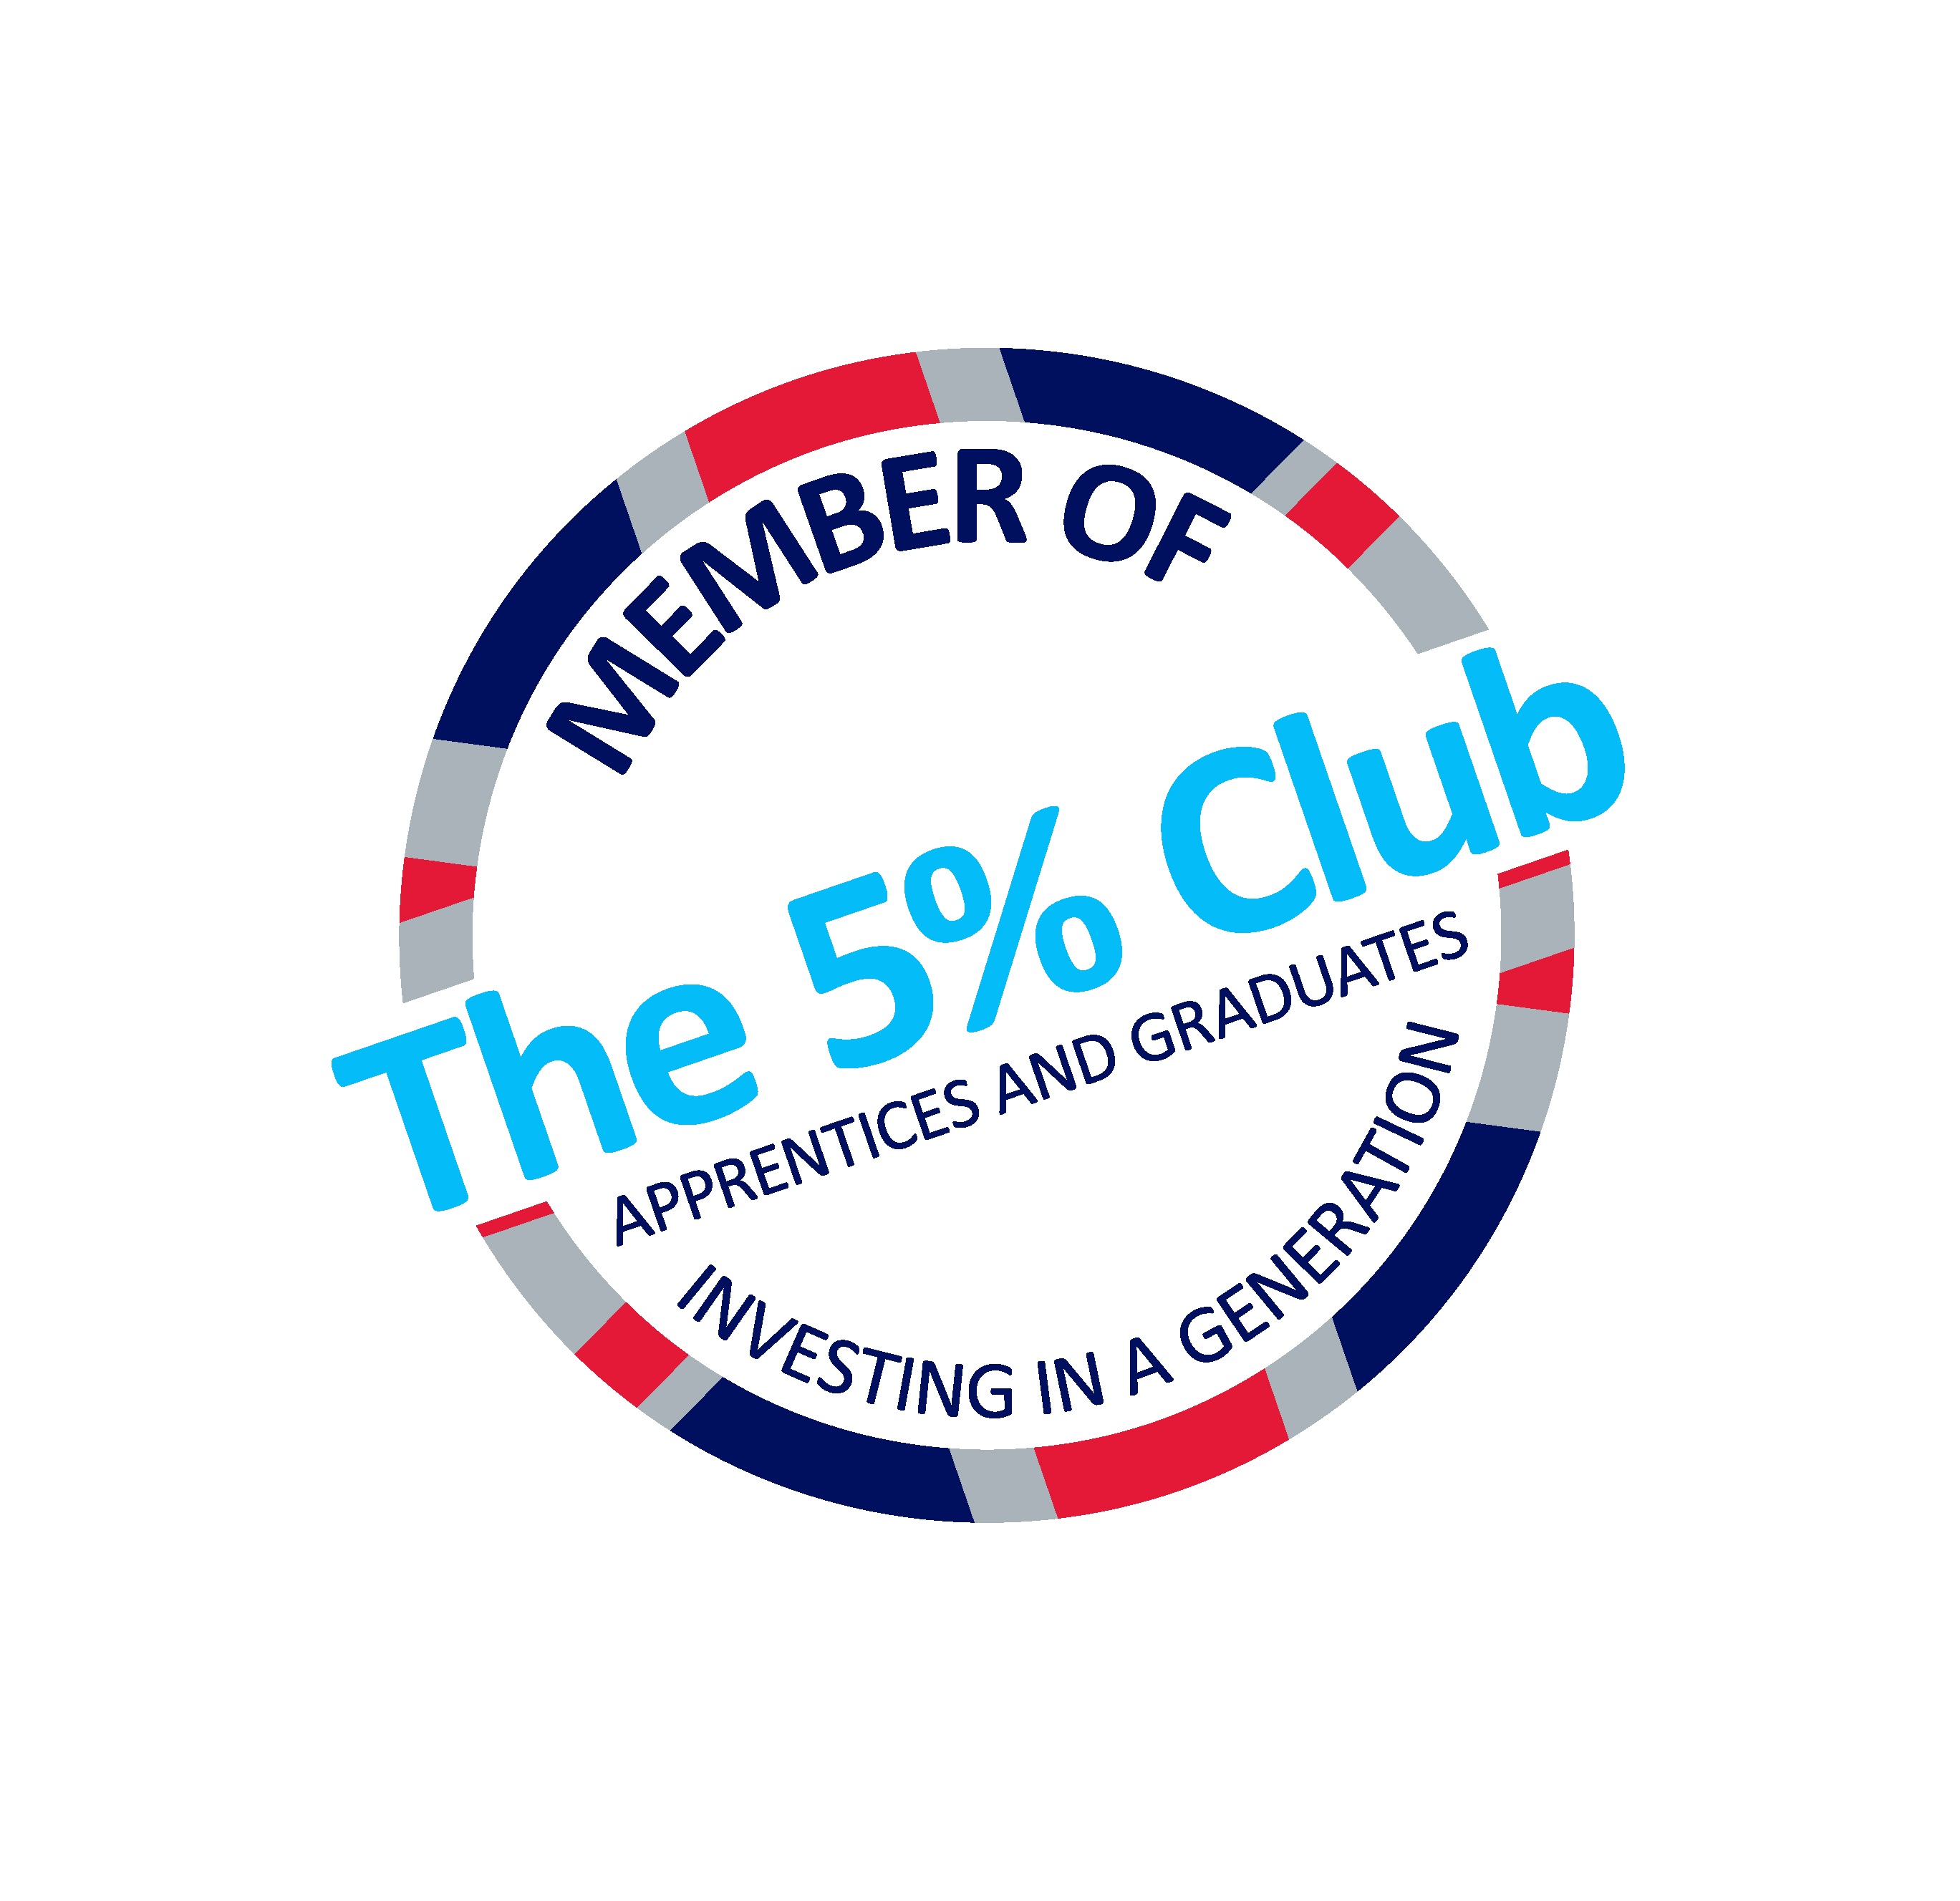 The_5%_Club_Logo_2016.jpg